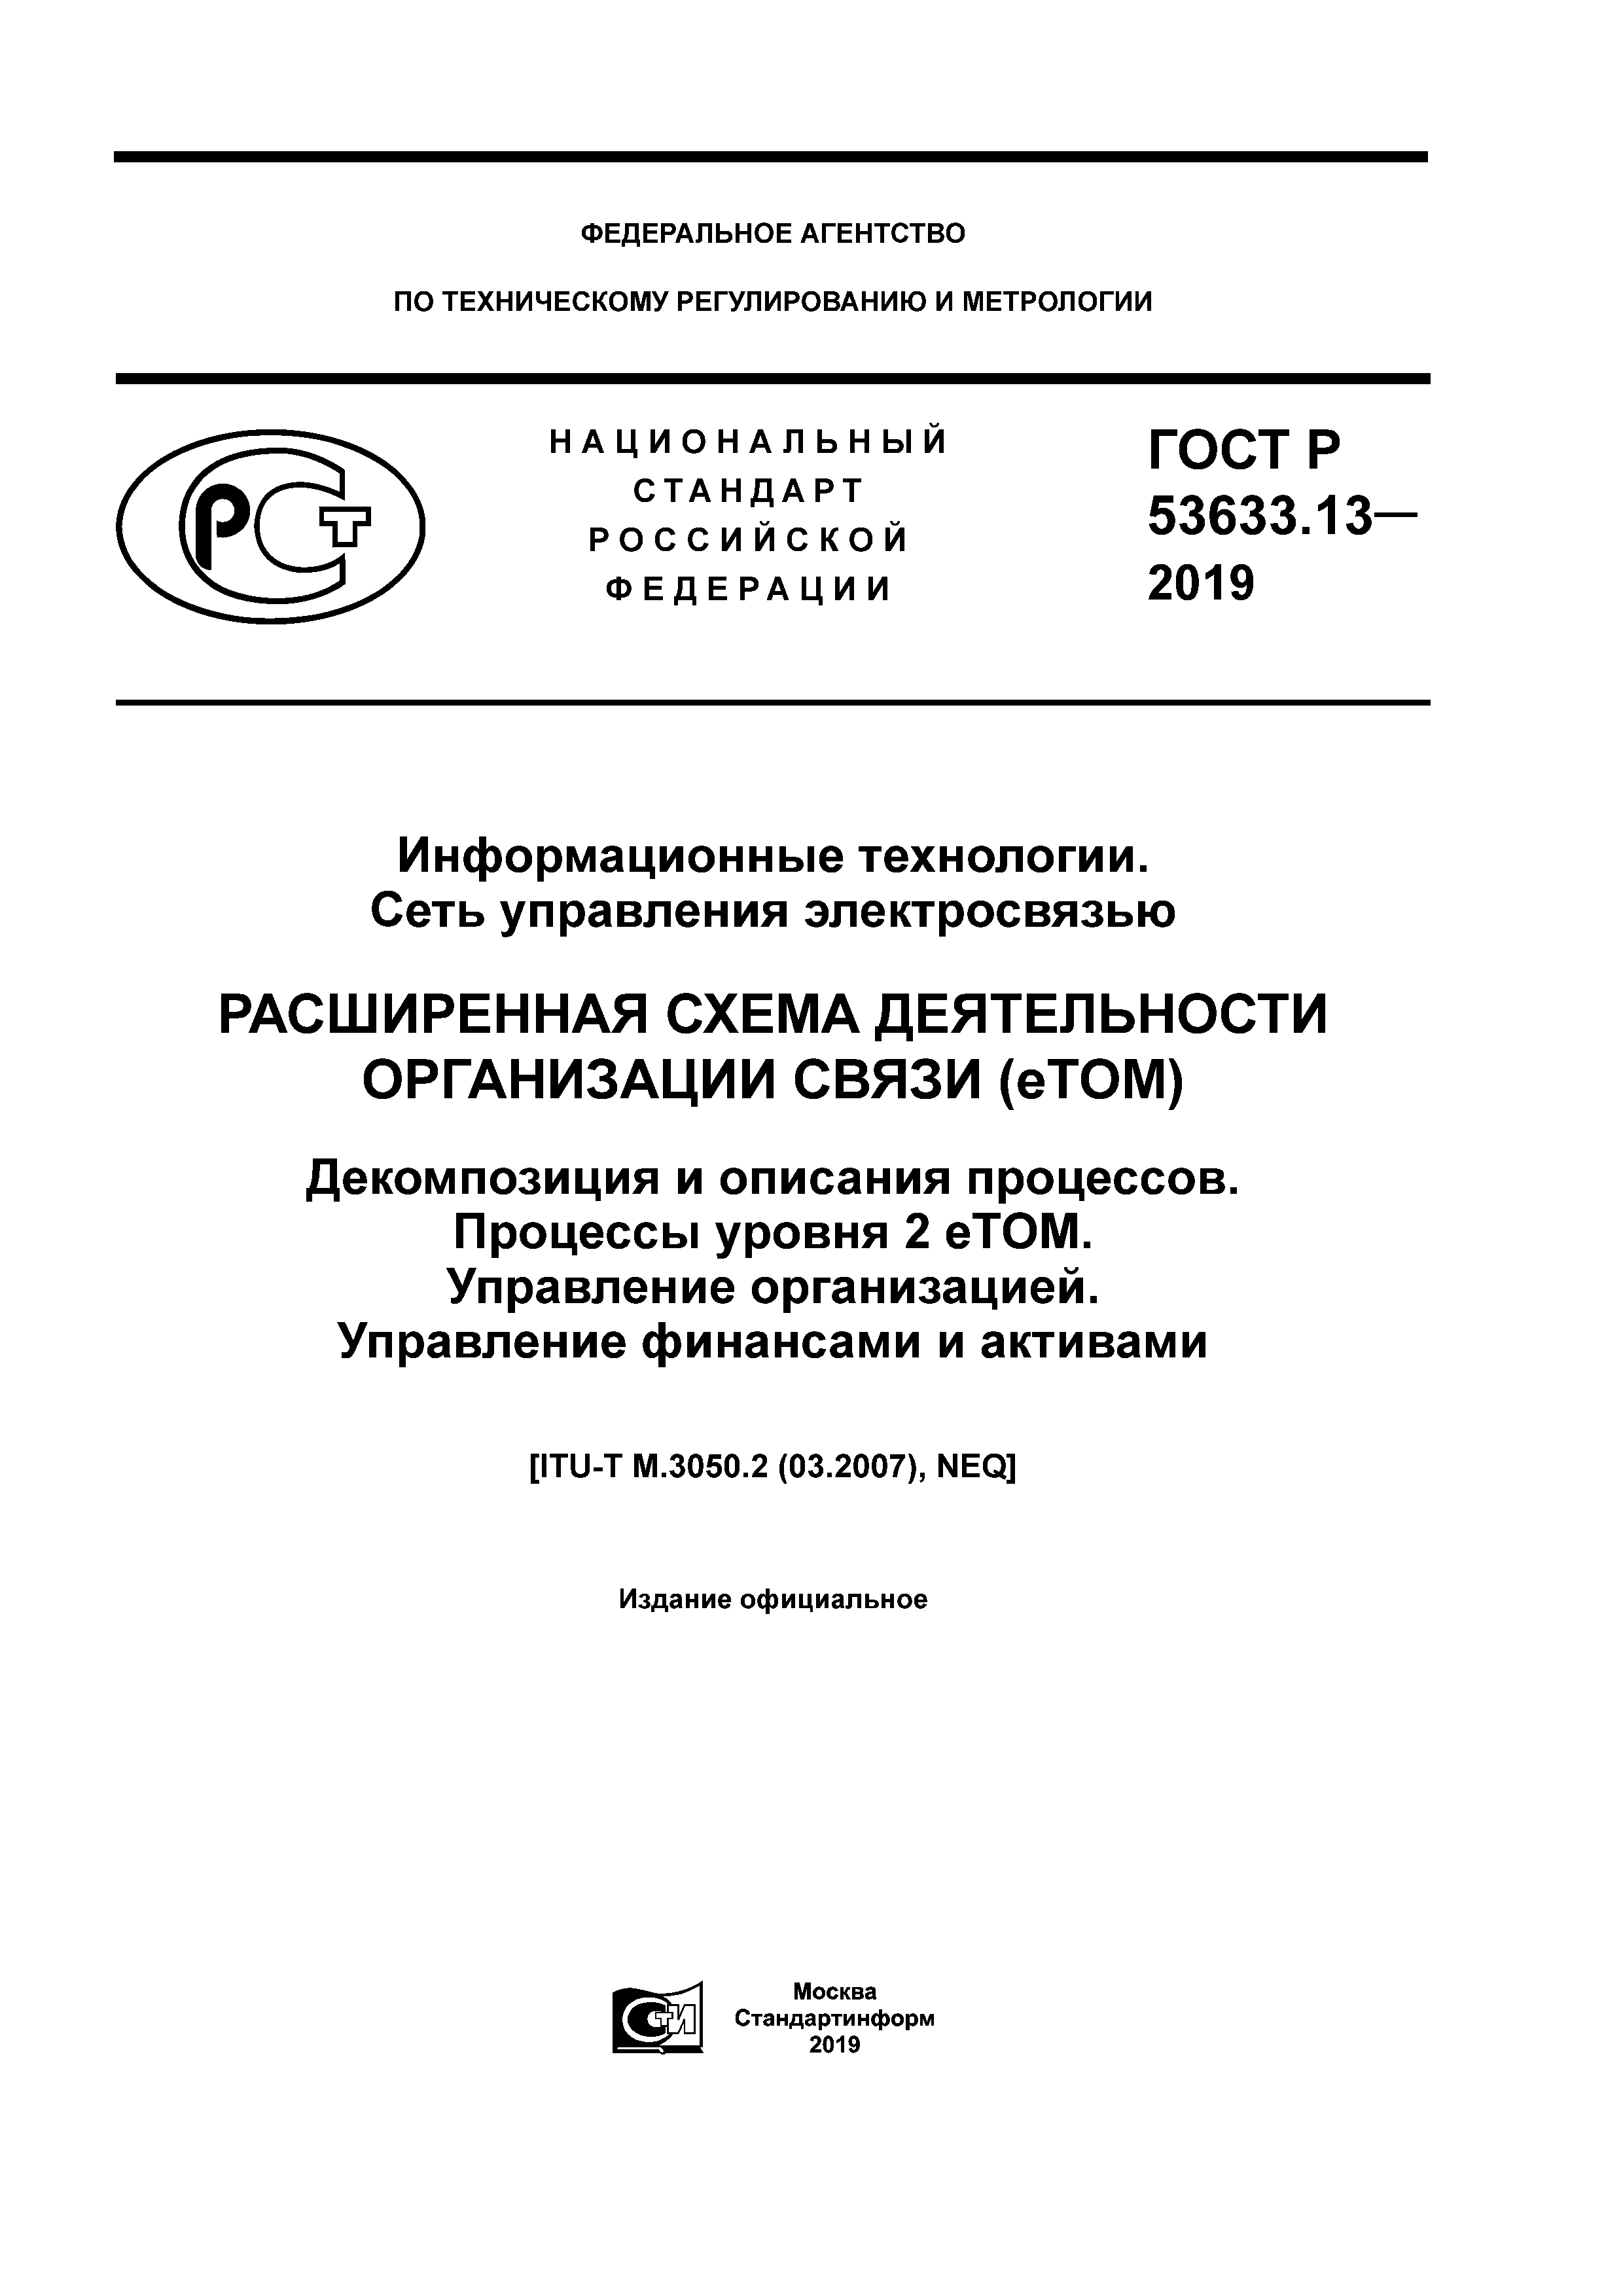 ГОСТ Р 53633.13-2019